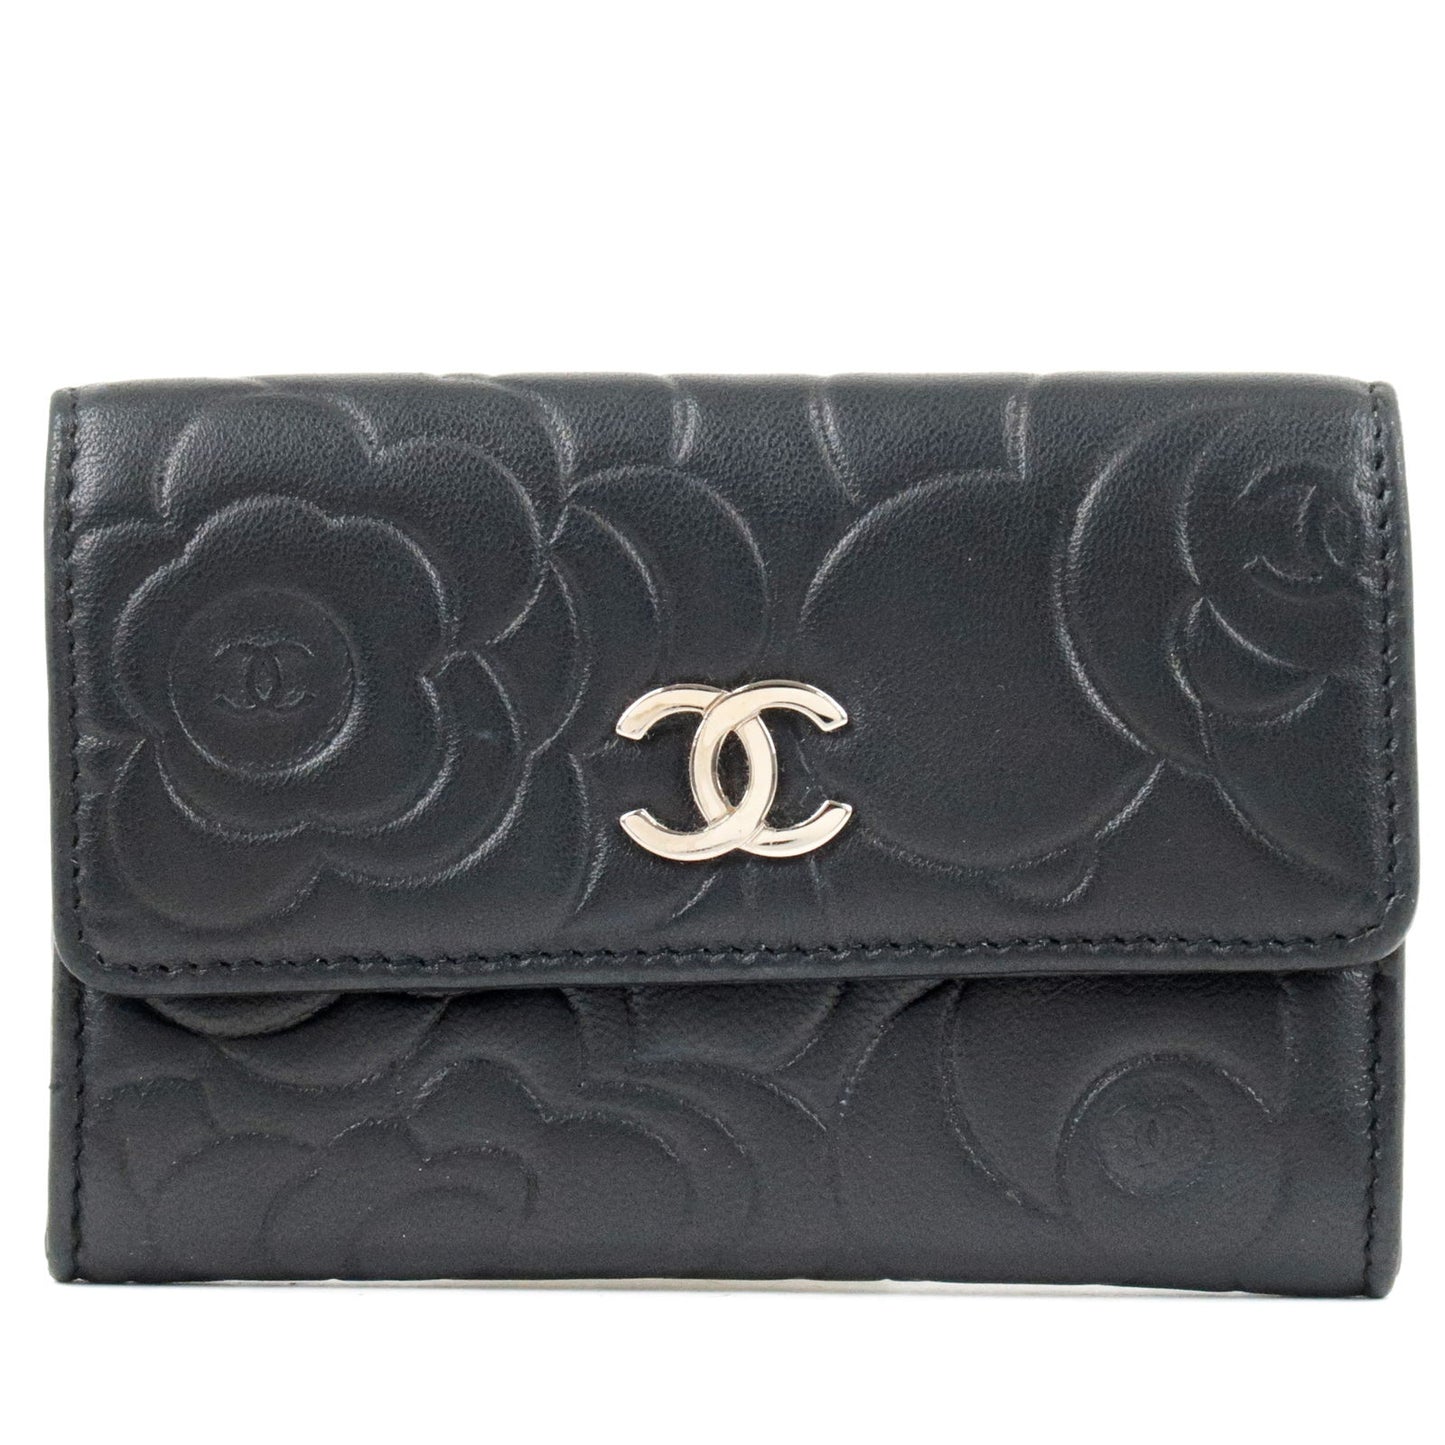 CHANEL-Camellia-Lamb-Skin-Leather-Card-Case-Black-A50088